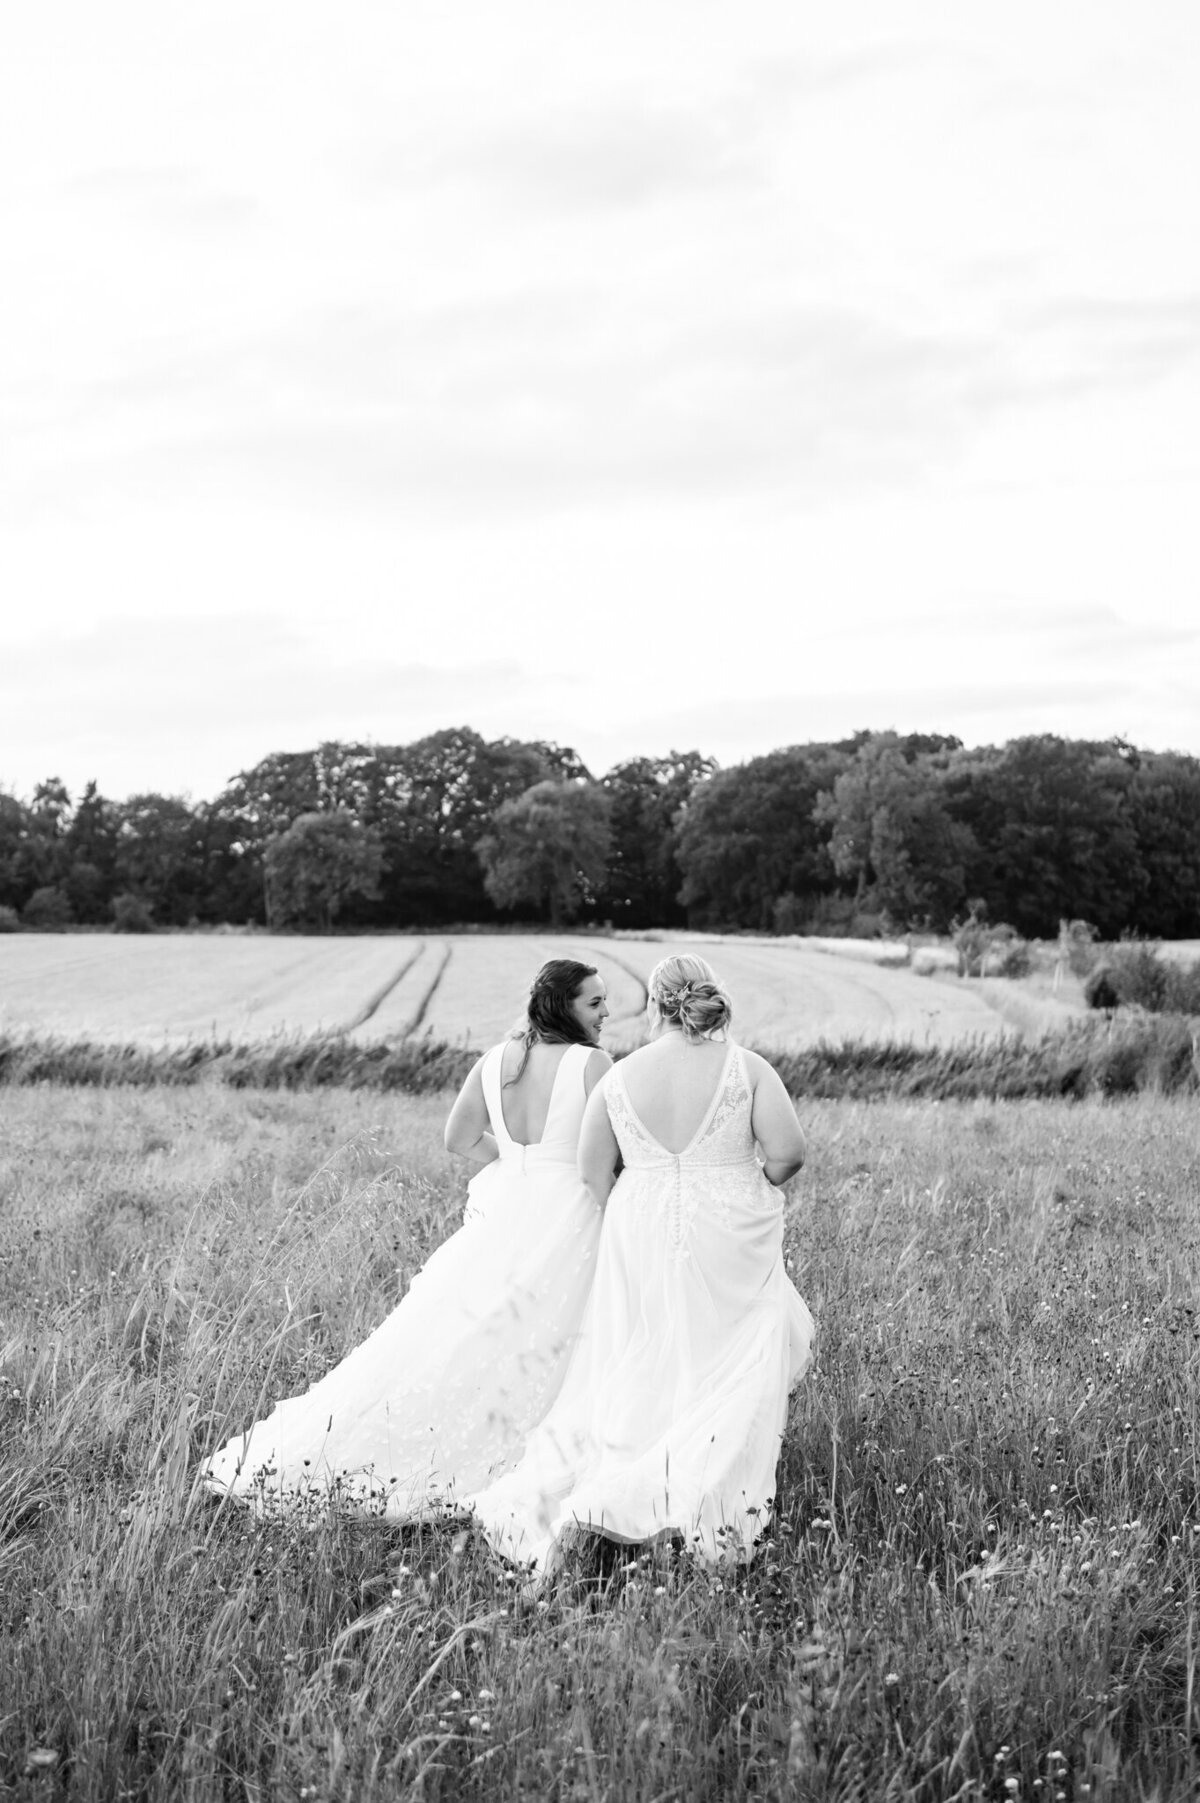 Lapstone Barn Cotswolds Wedding Photographer - Chloe Bolam - S&H - 27.07.23 -96